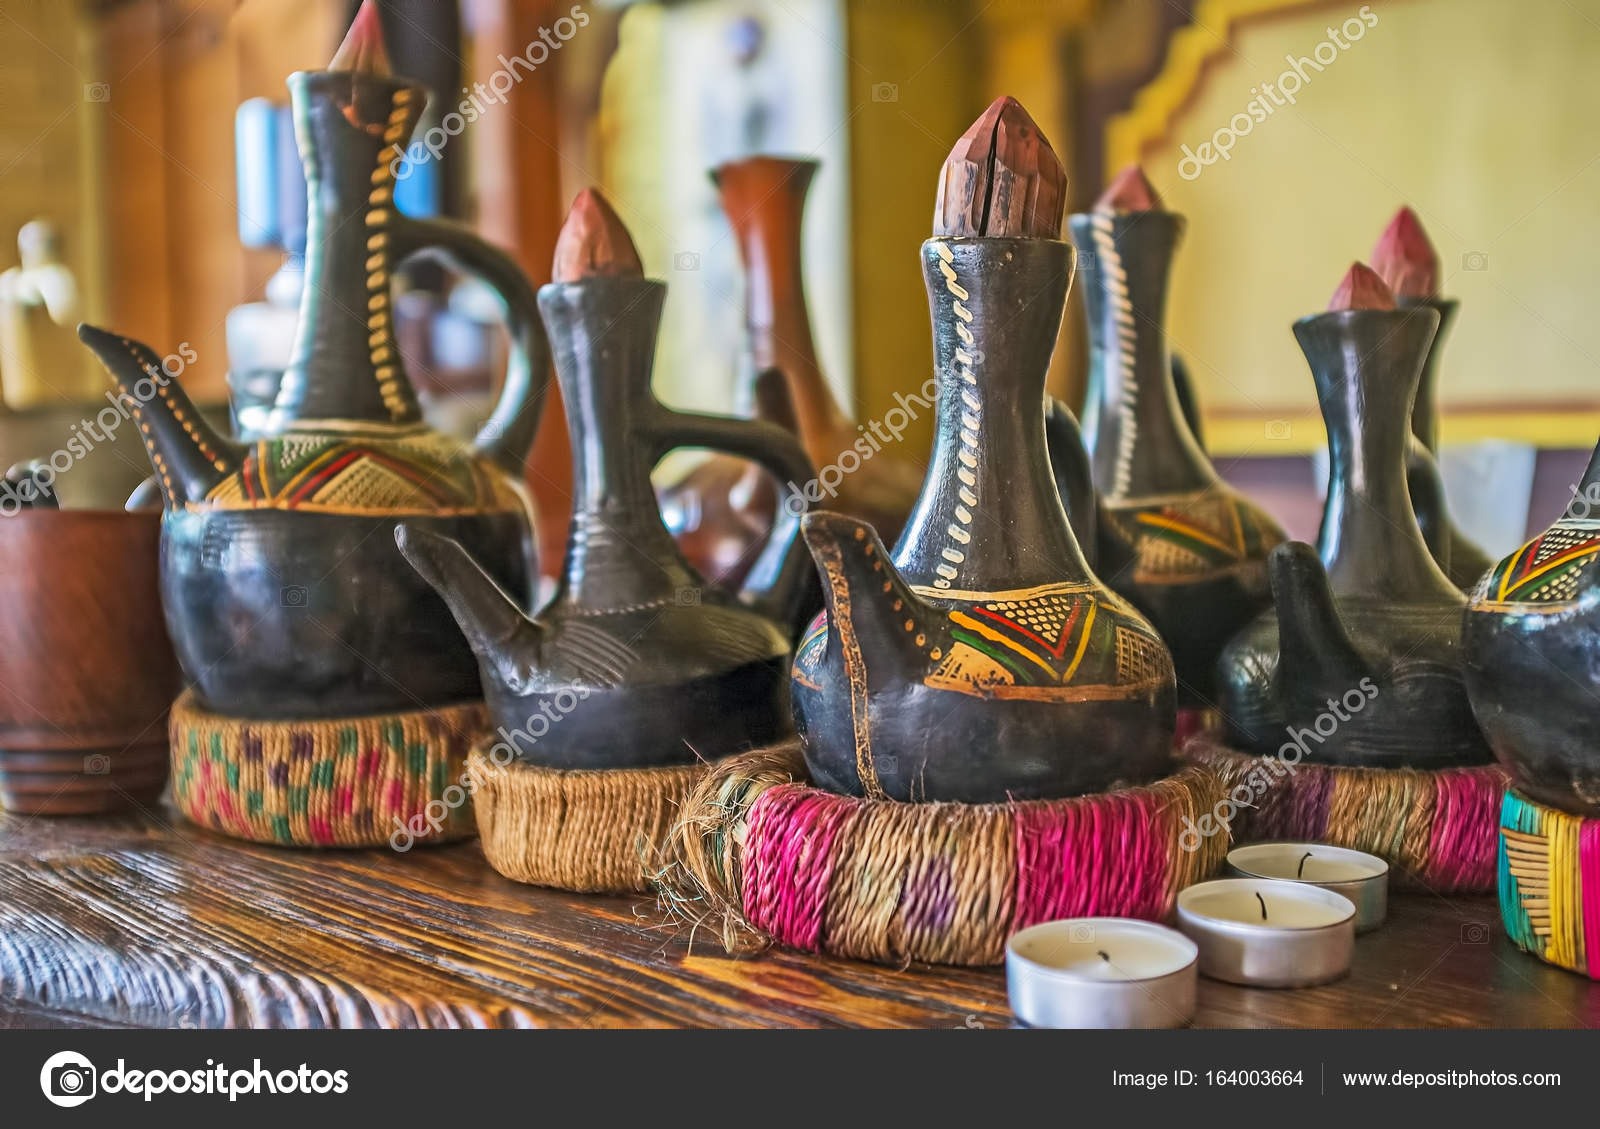 https://st3.depositphotos.com/2115371/16400/i/1600/depositphotos_164003664-stock-photo-ethiopian-jebena-coffee-pots-on.jpg